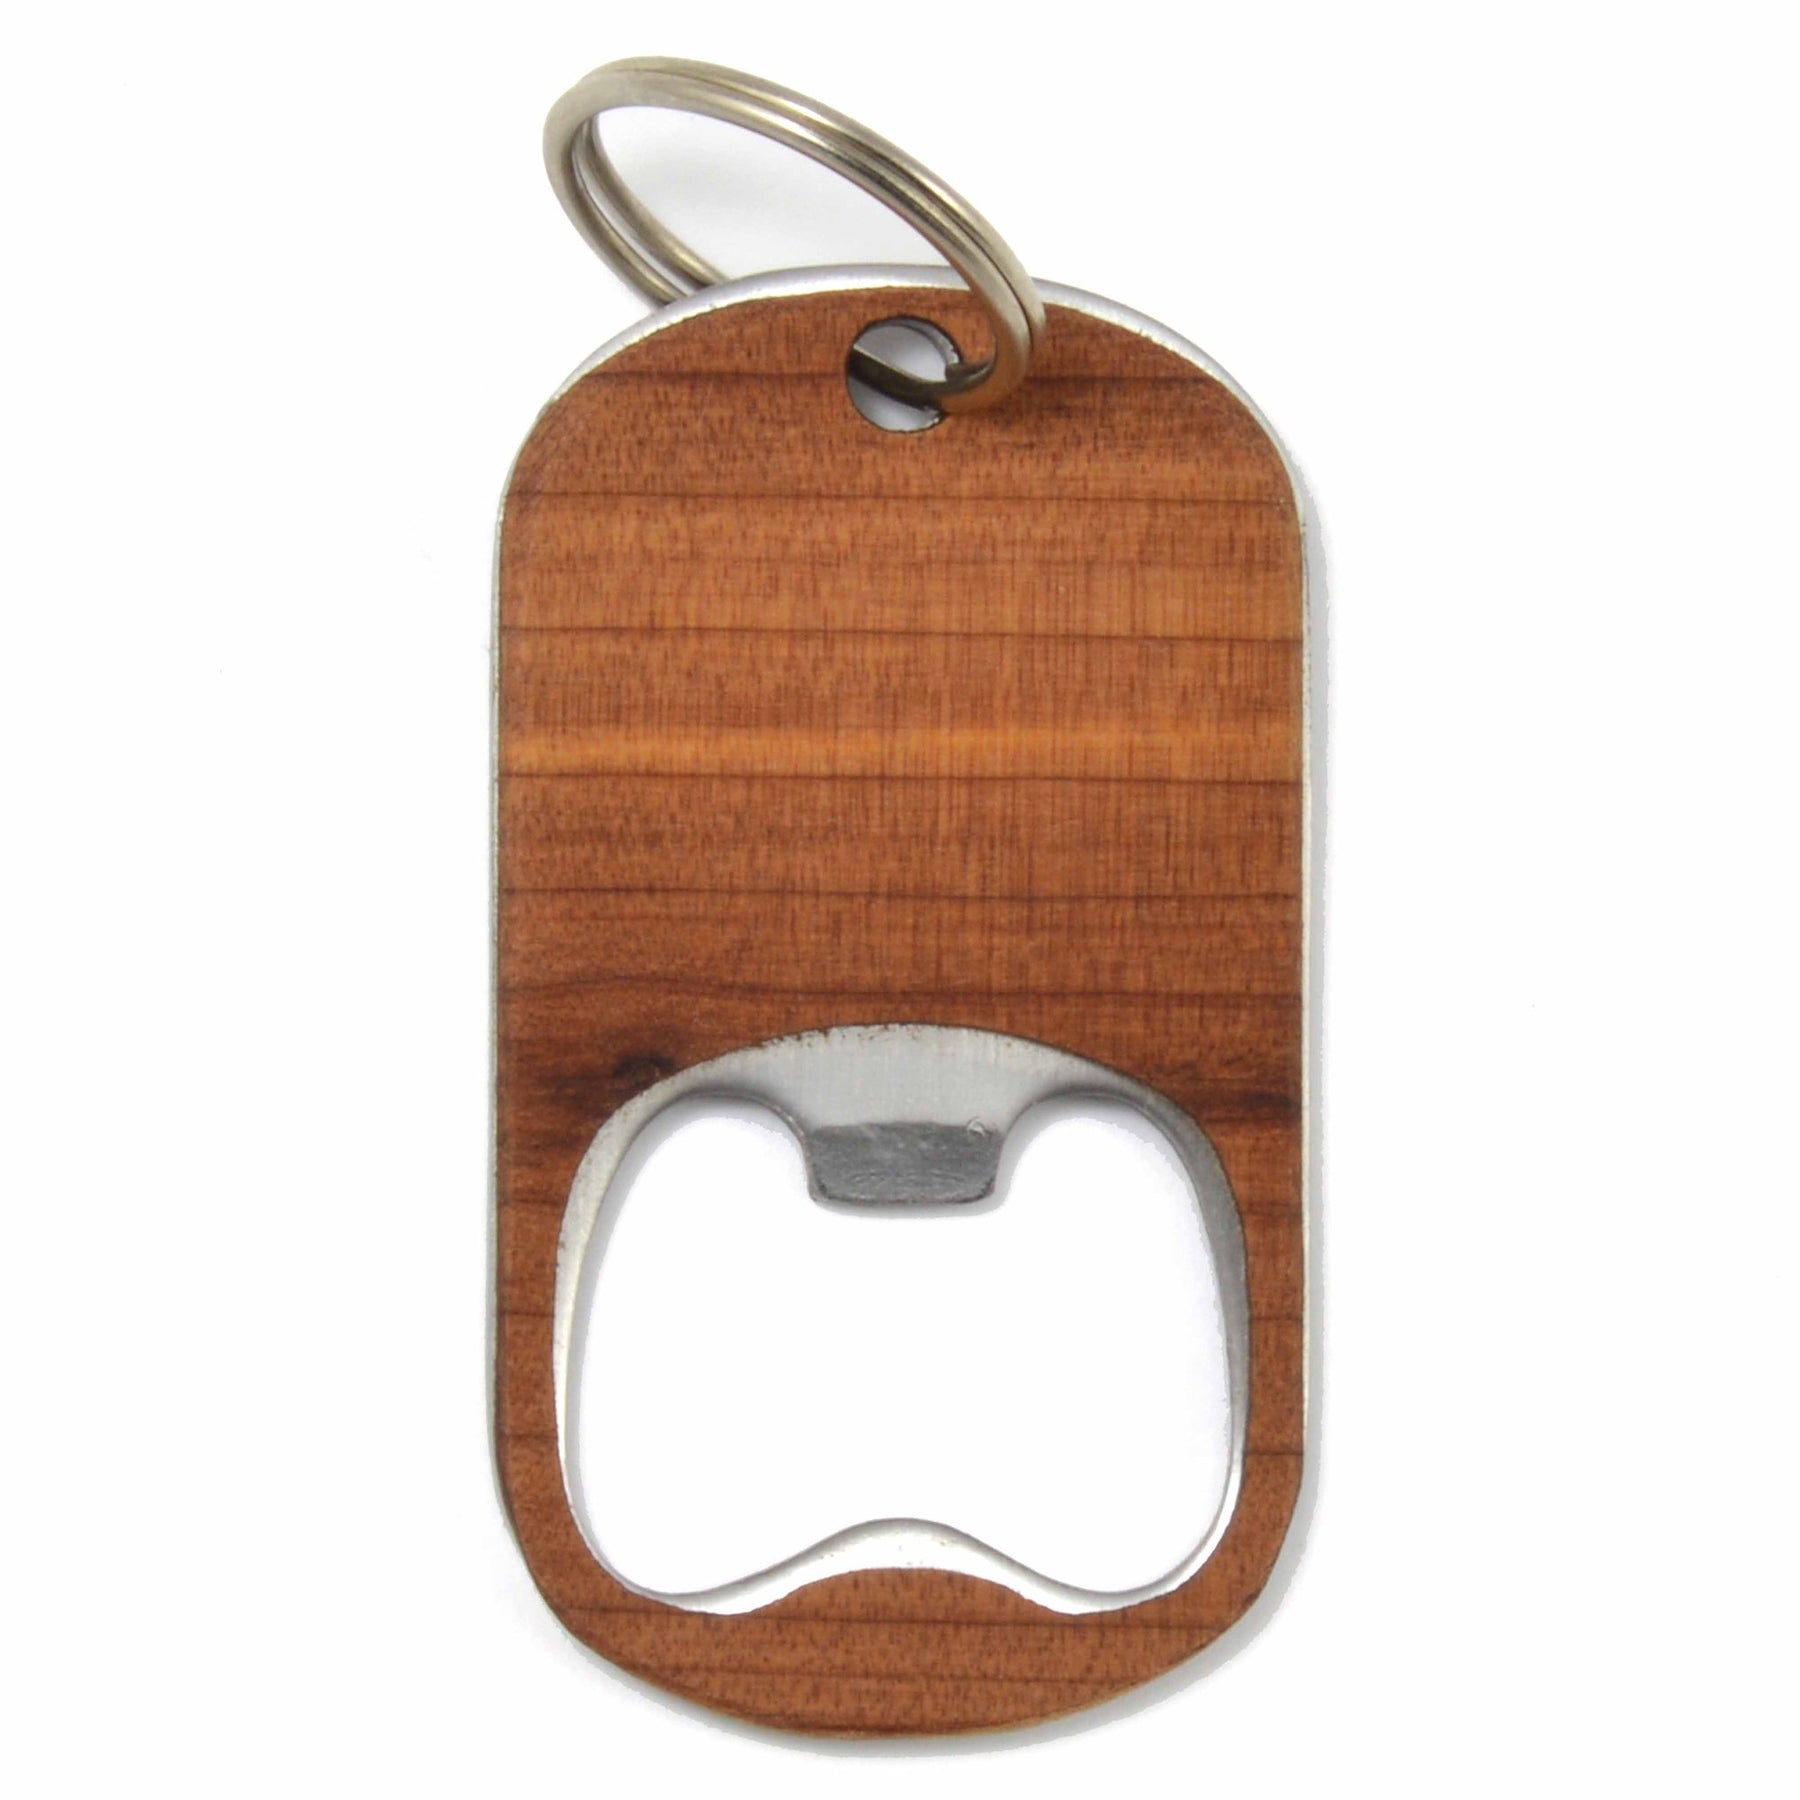 Handcrafted Wooden Key Chain Bottle Opener